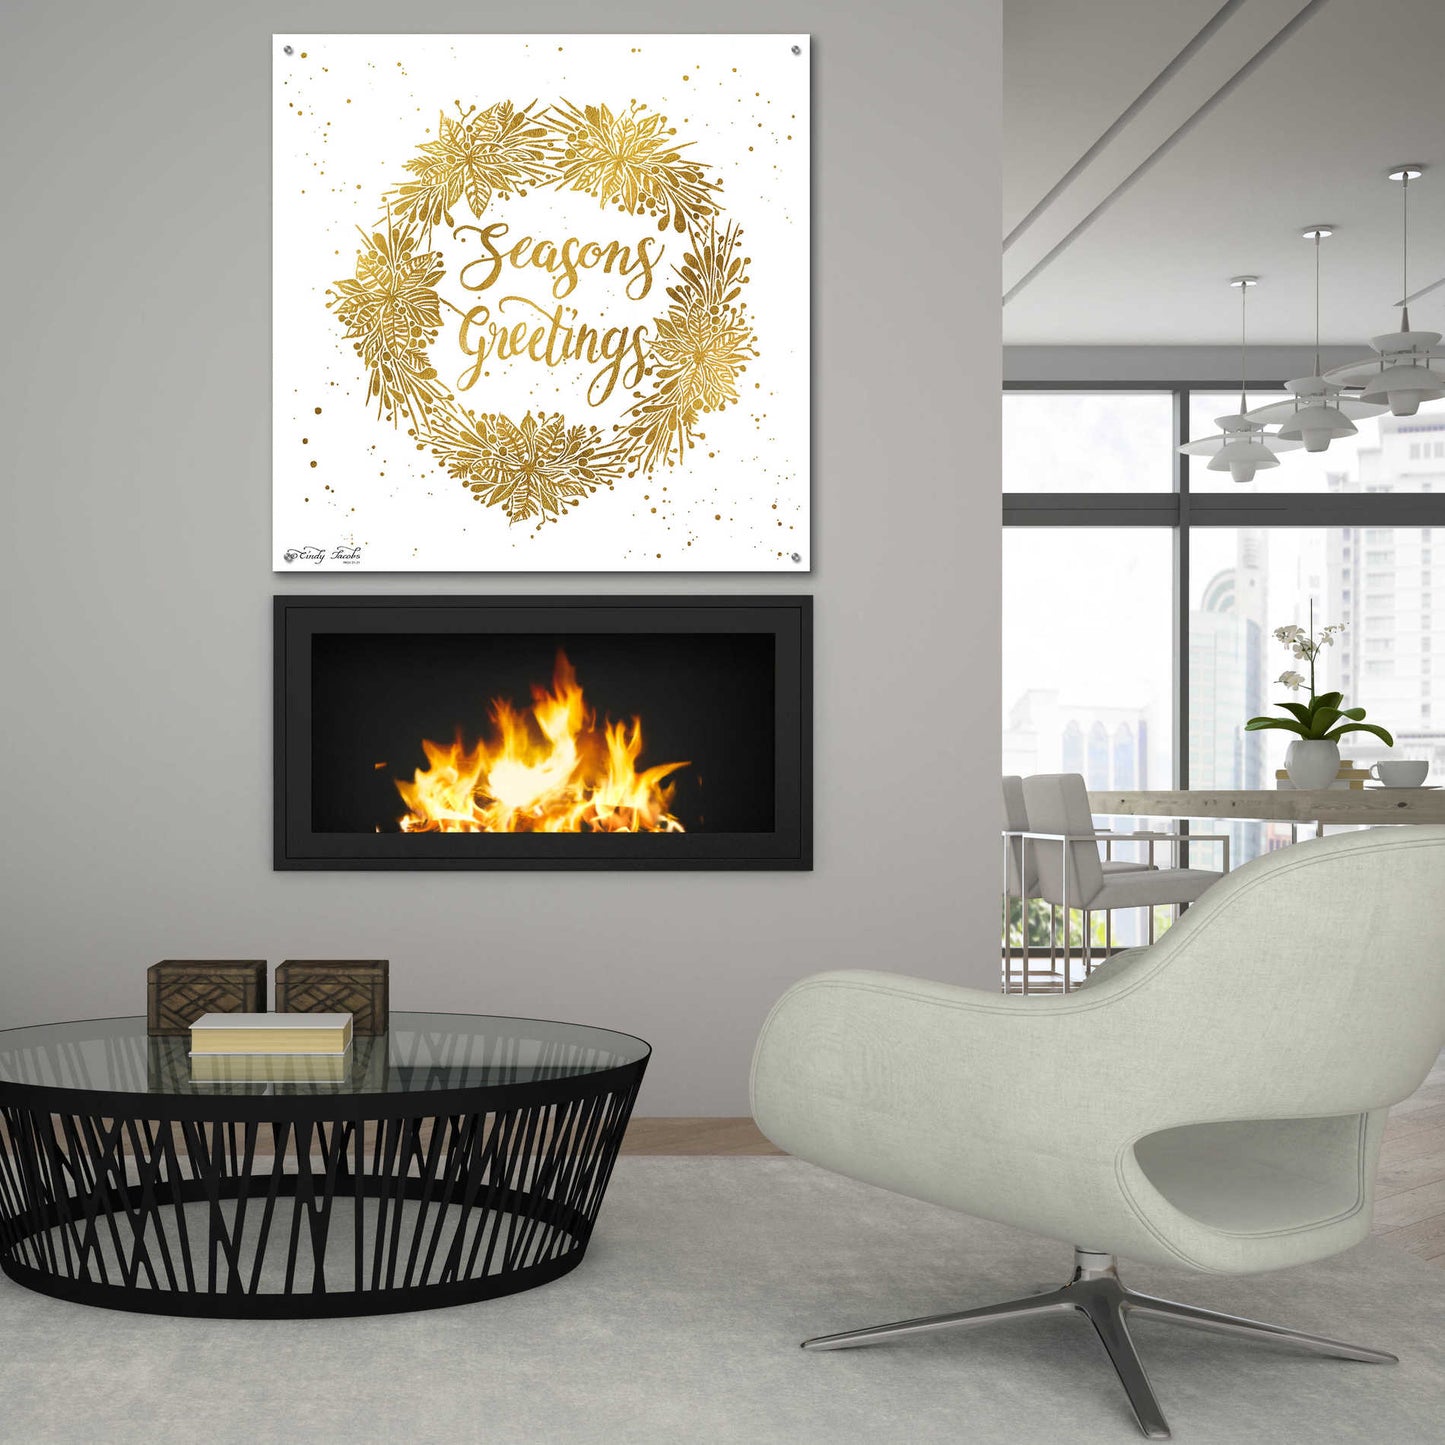 Epic Art 'Seasons Greetings Gold Wreath' by Cindy Jacobs, Acrylic Glass Wall Art,36x36